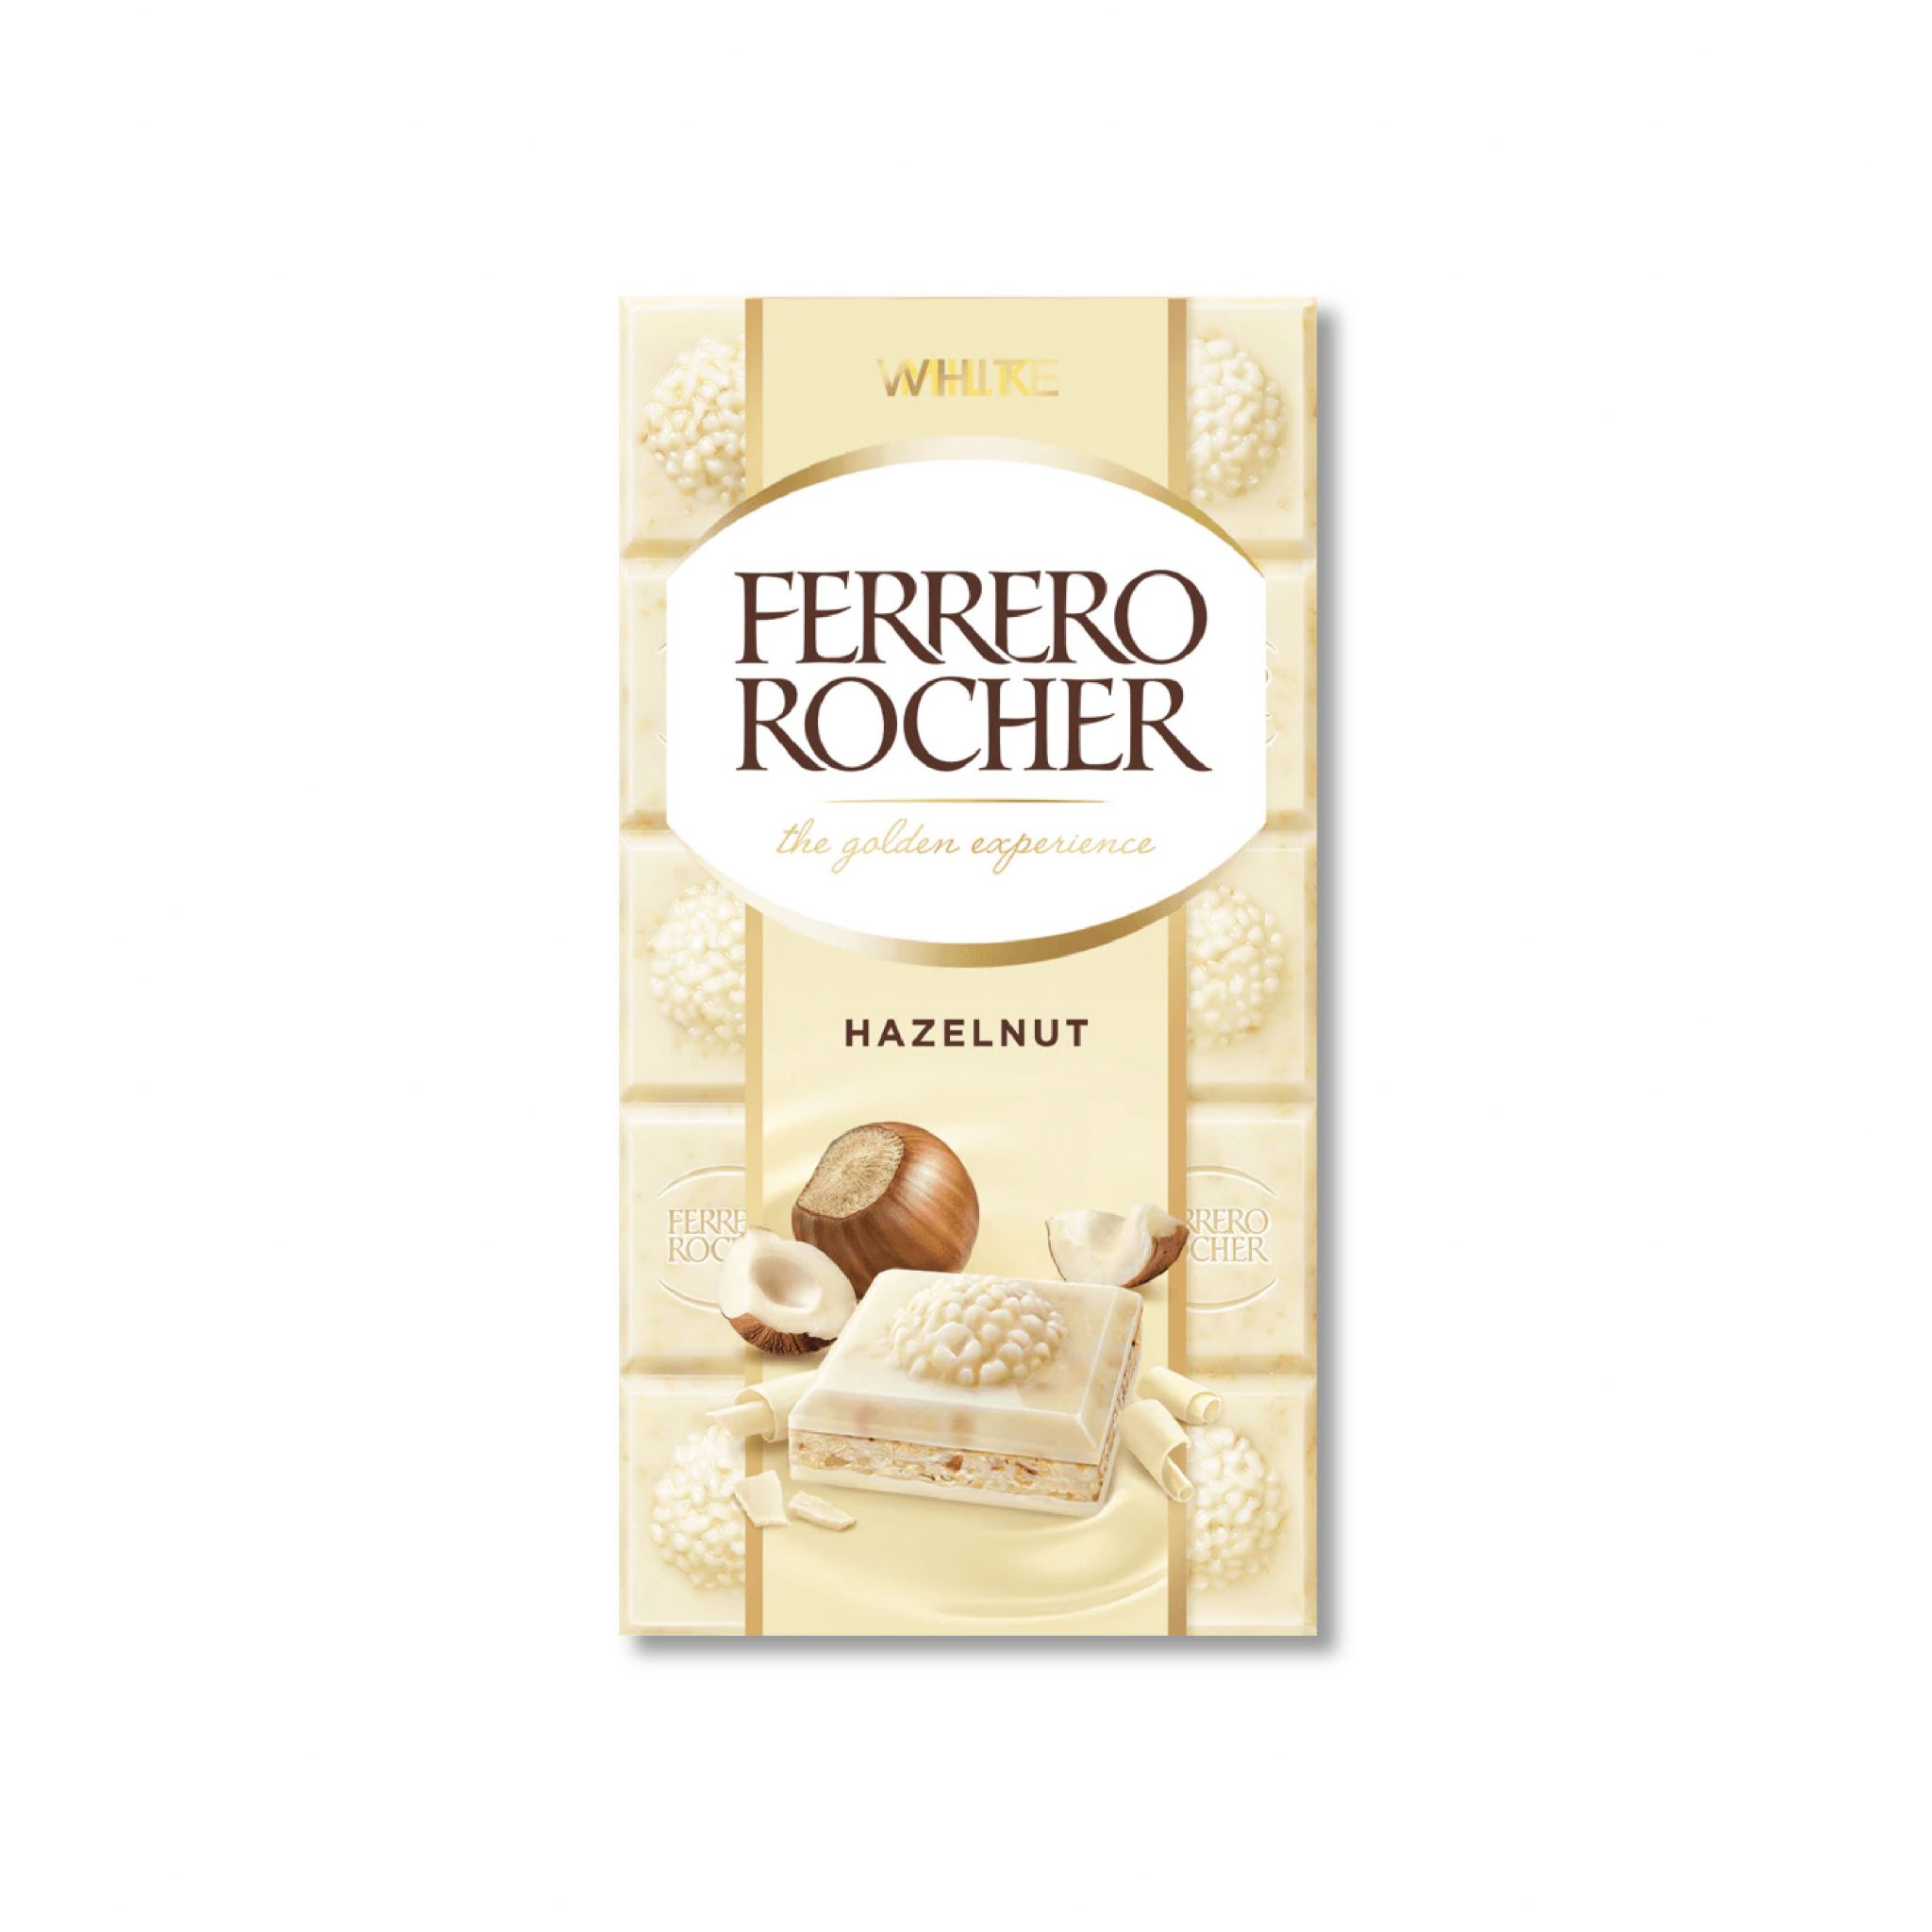 Ferrero Rocher White Hazelnut Chocolate Bar G Shophere